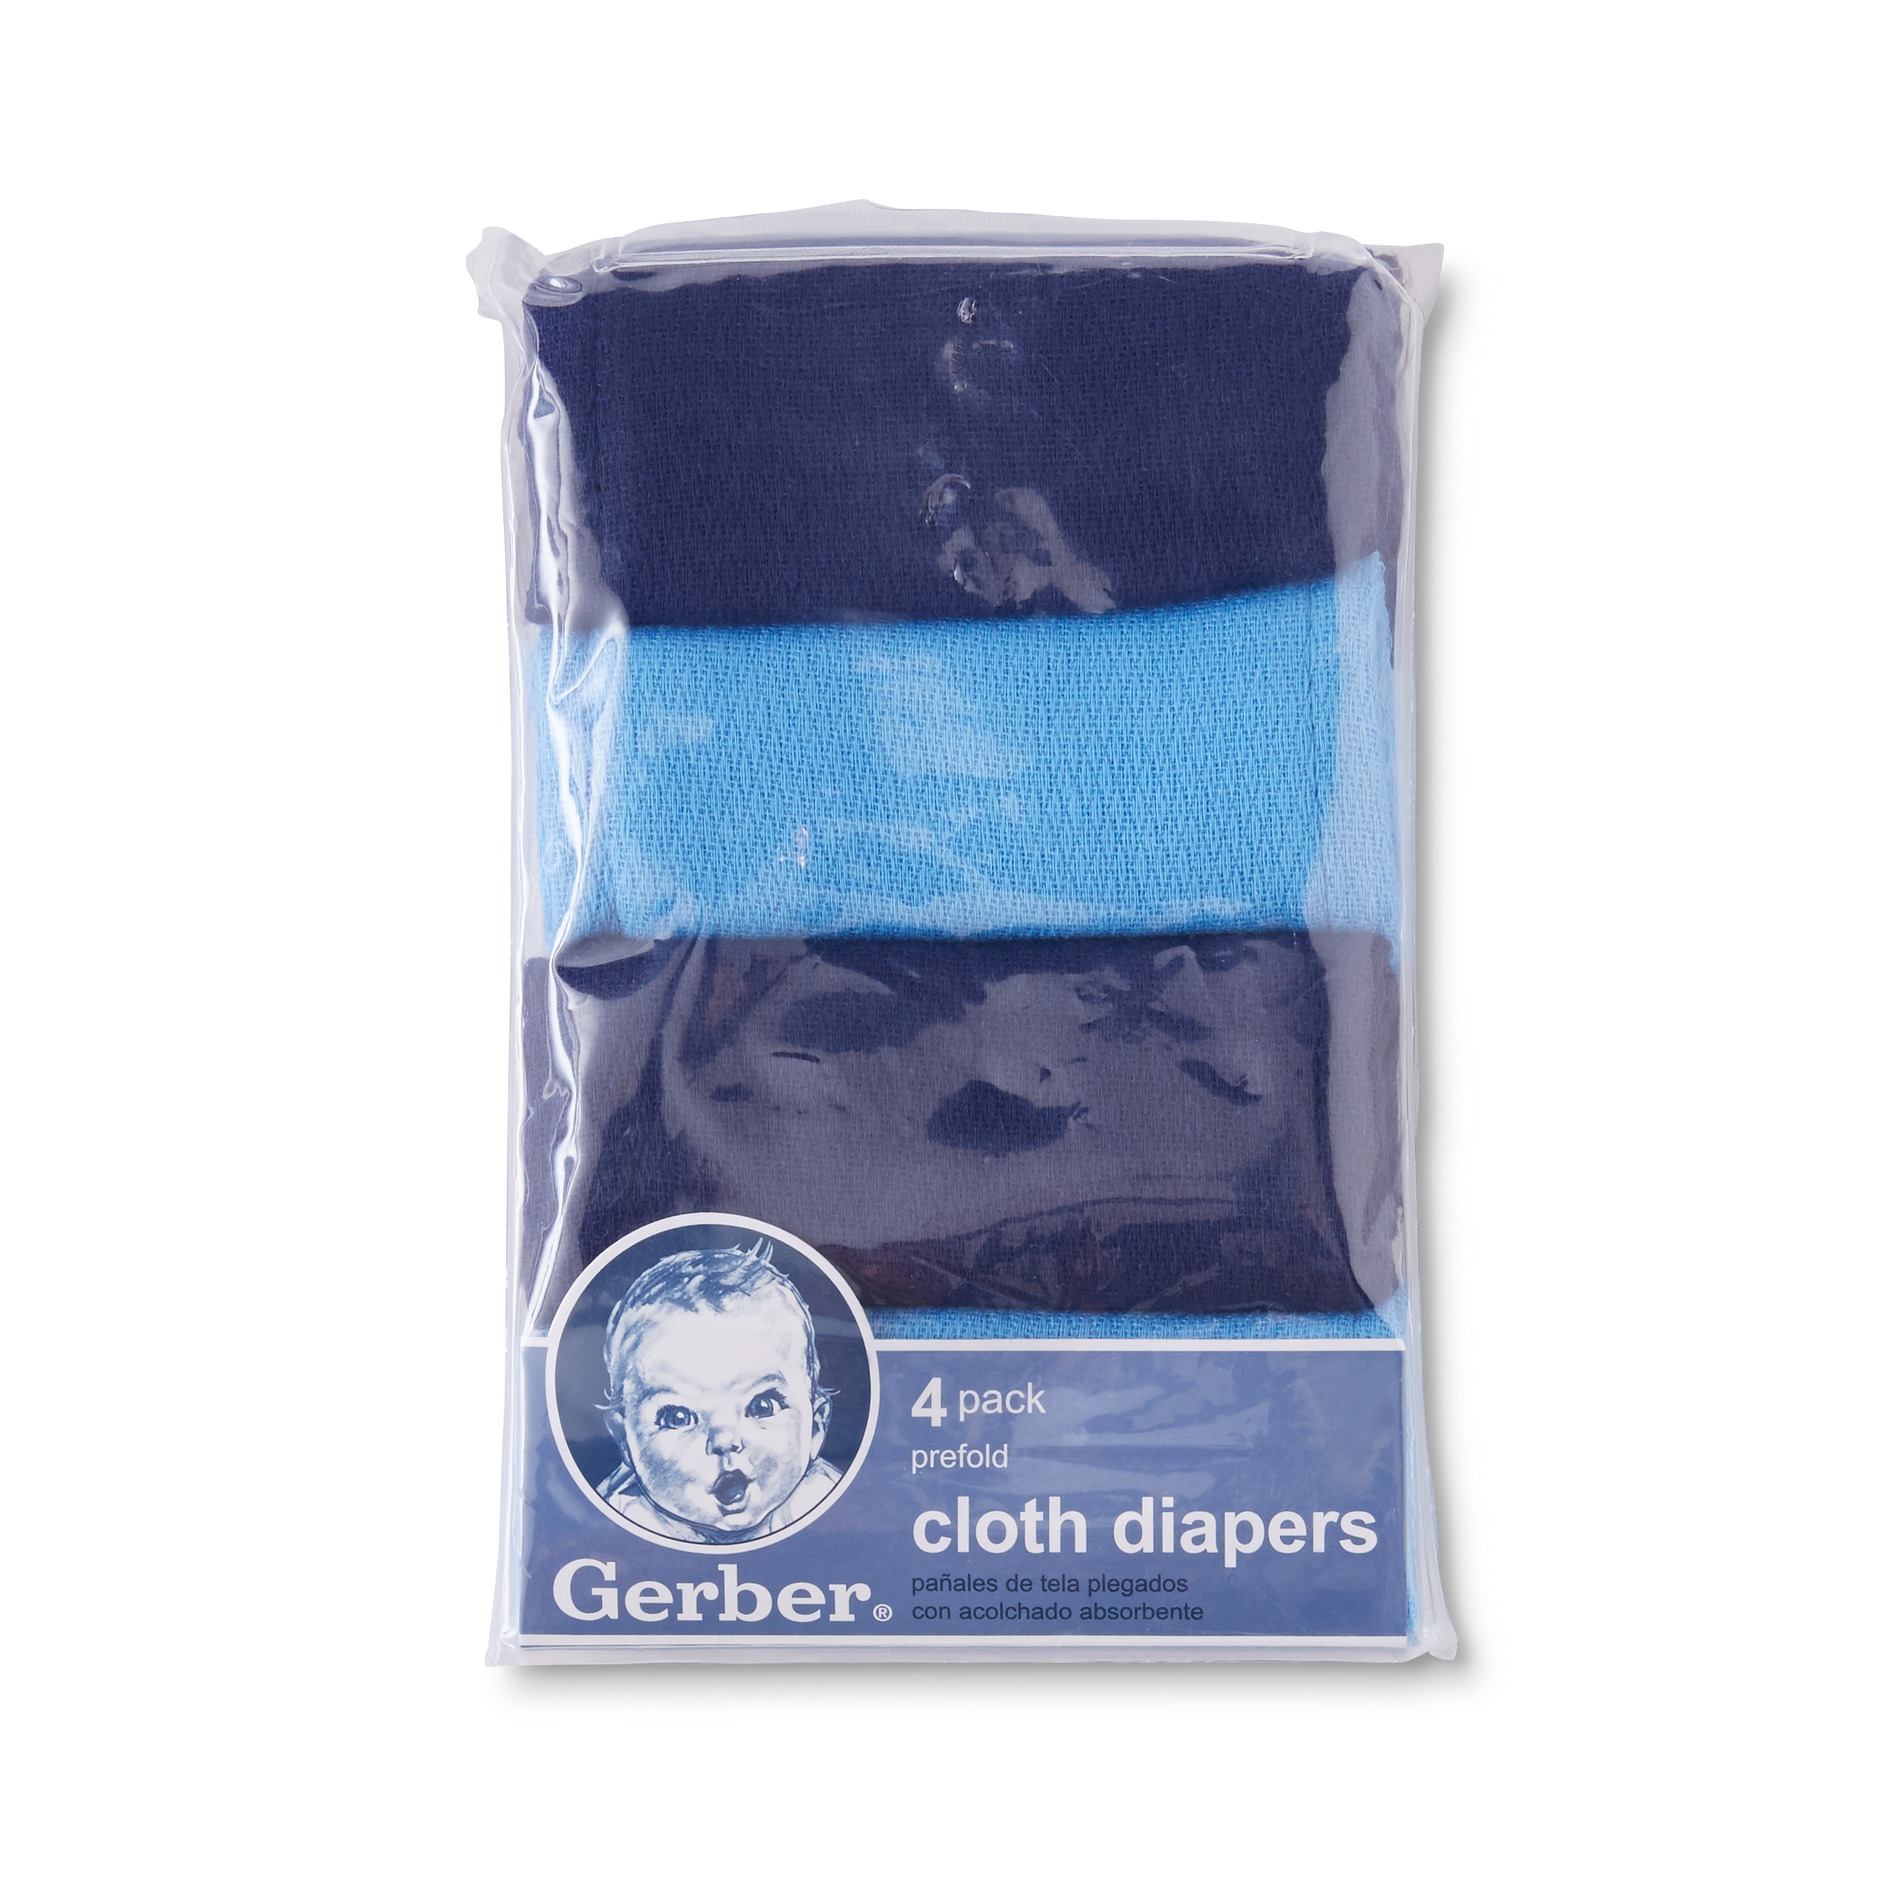 gerber cloth diapers burp cloths